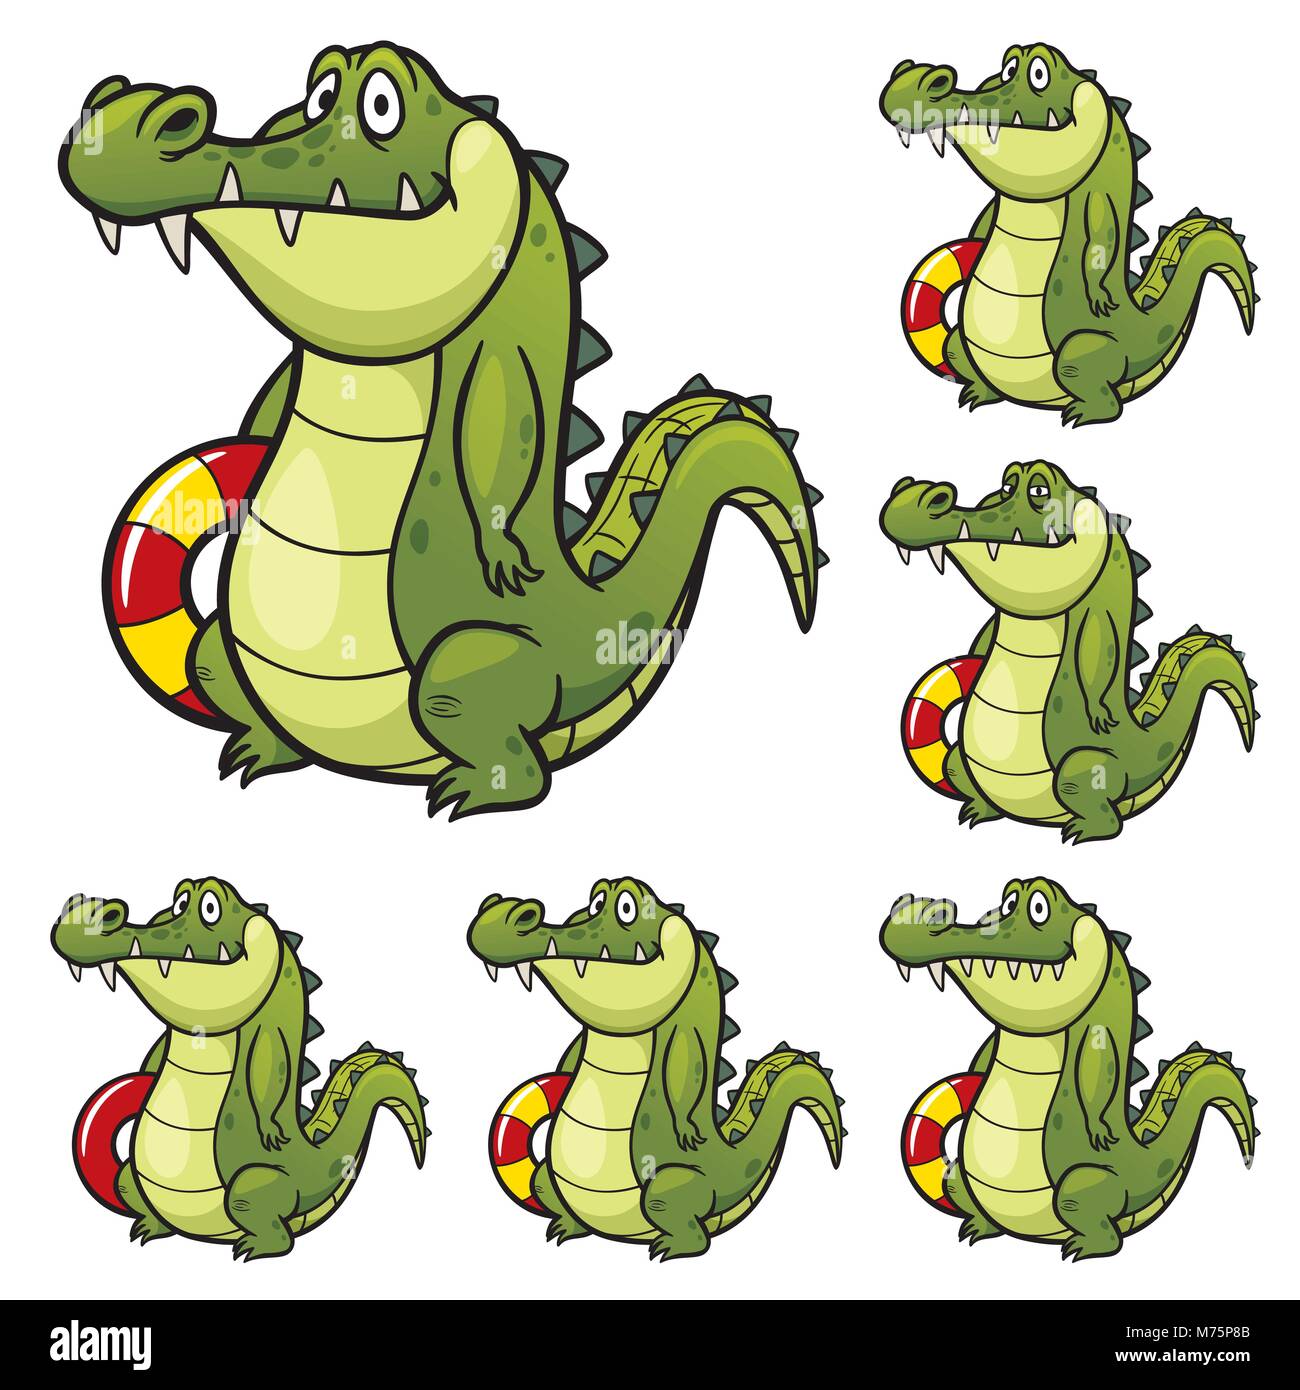 Vector Illustration of make the choice matching - Crocodile Stock Vector